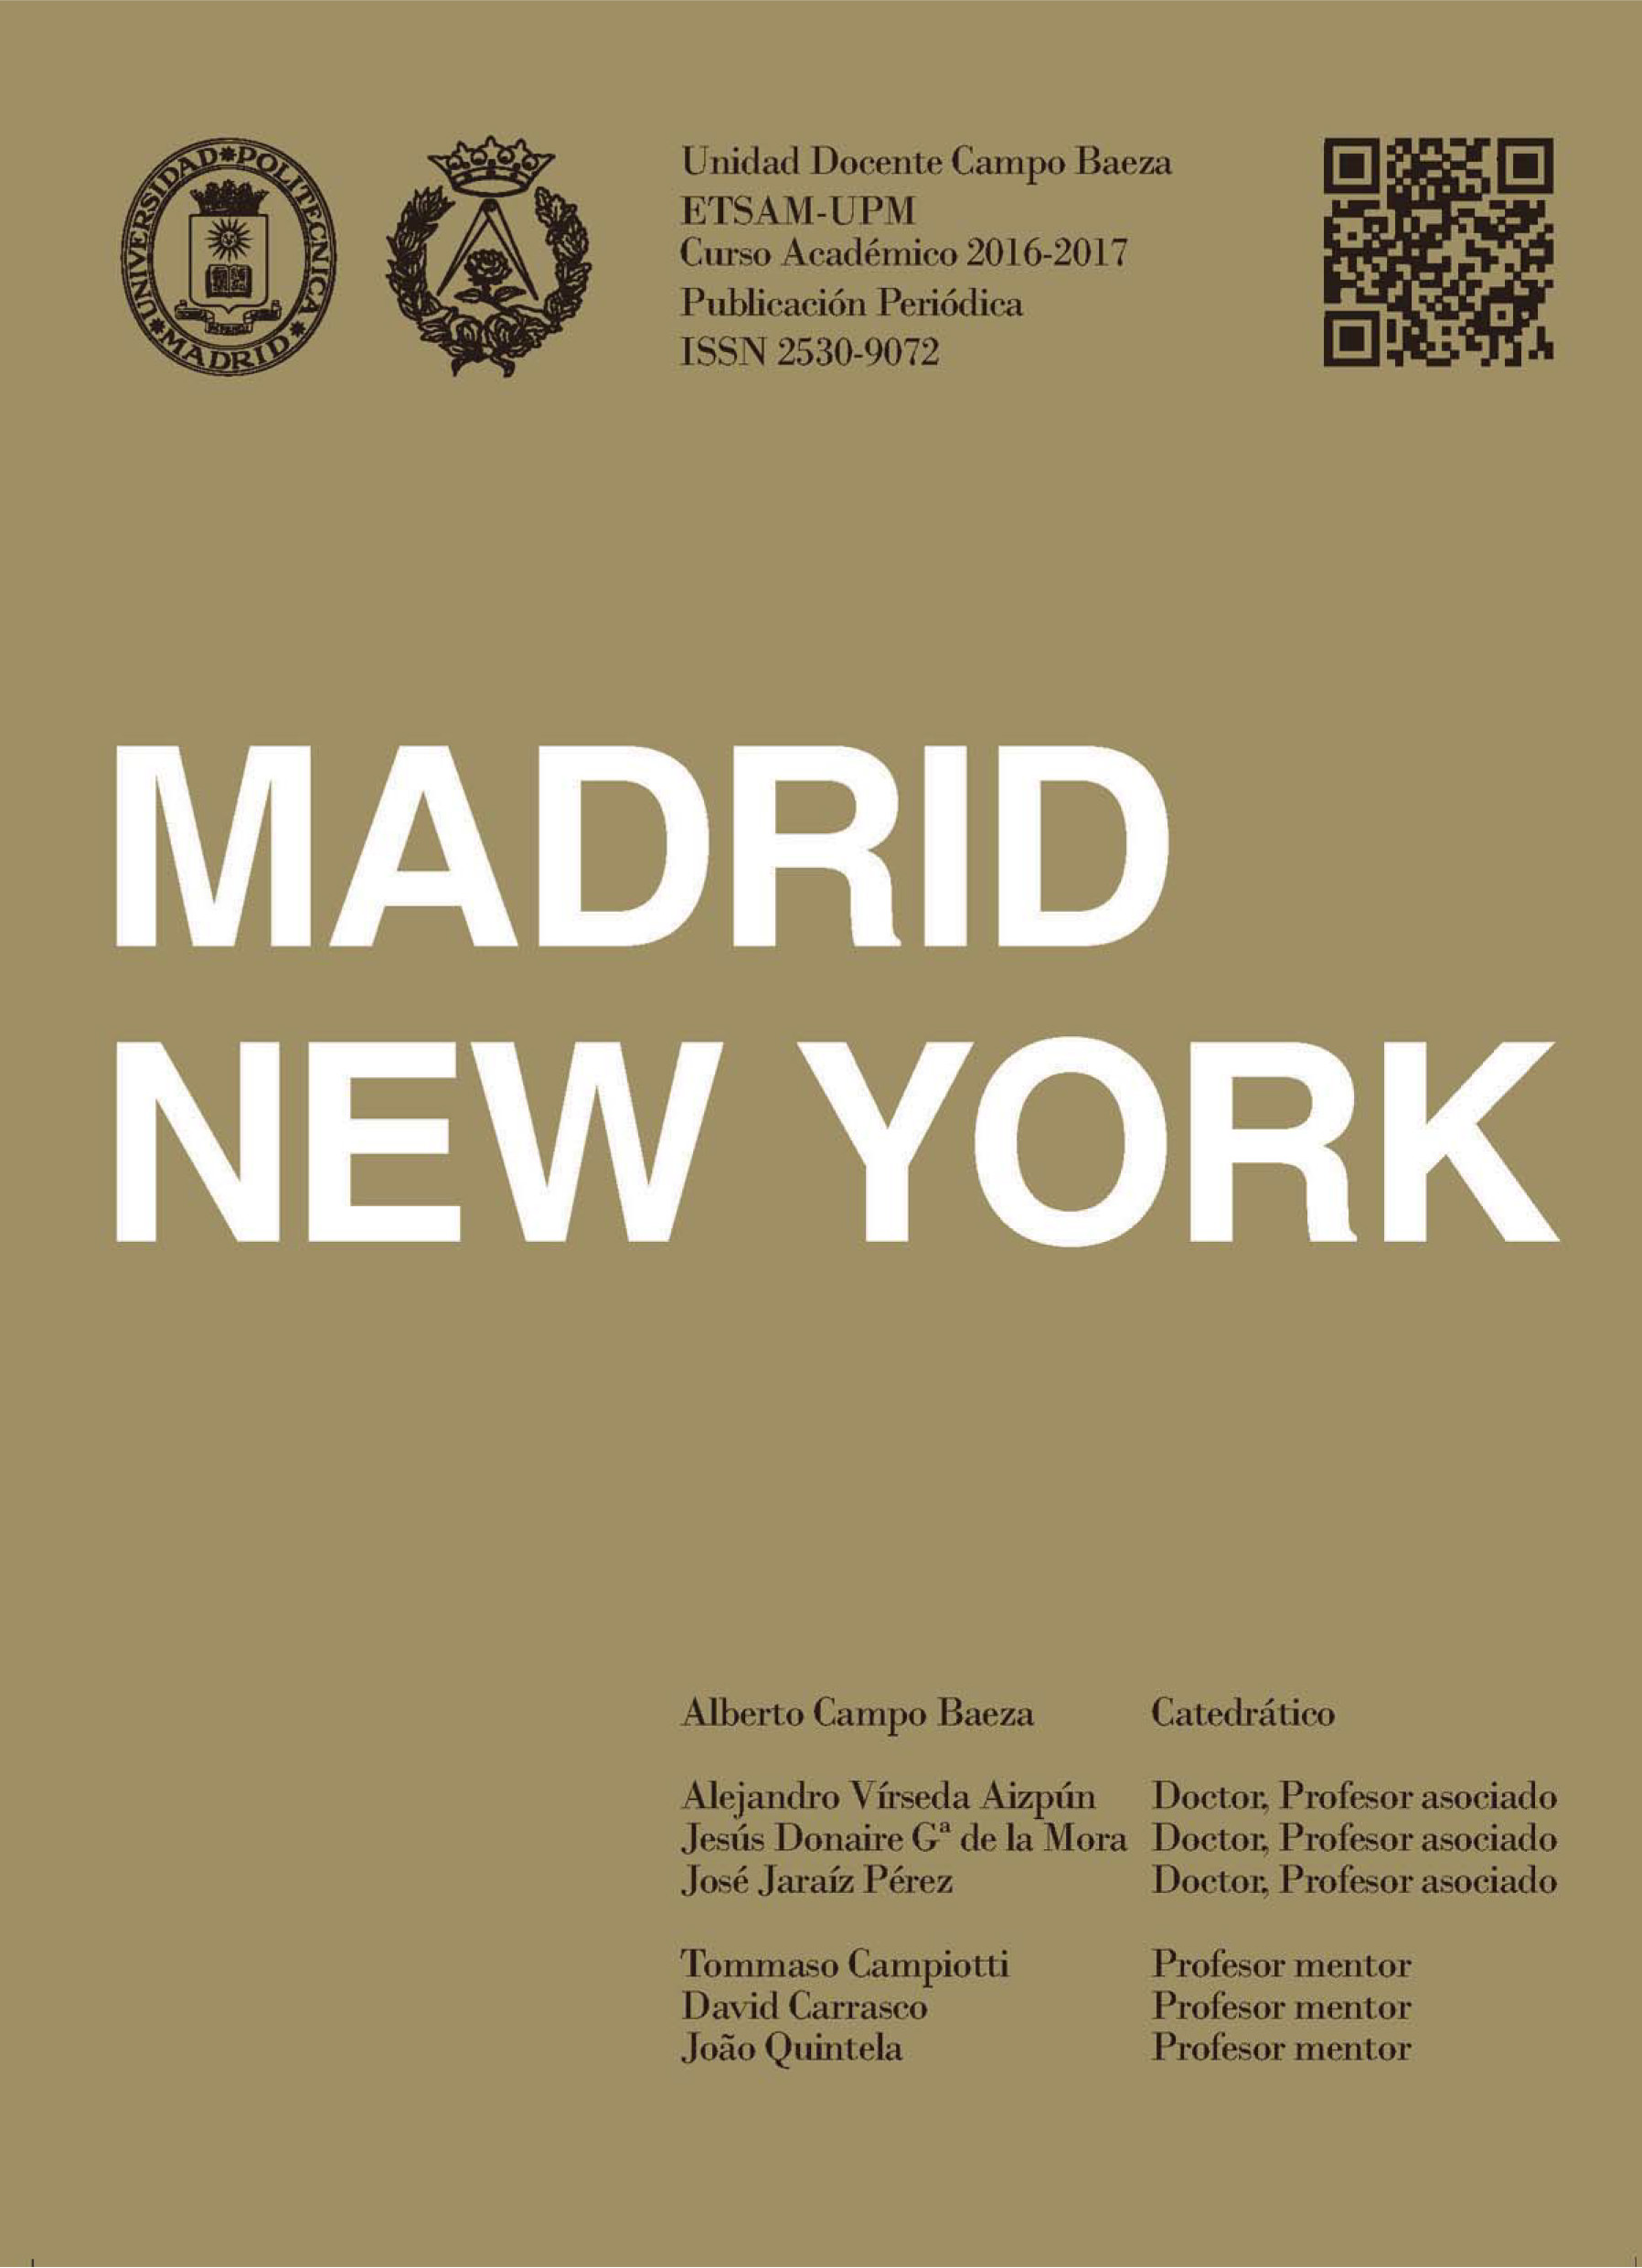 201708 ACB UD Madrid New York.pdf